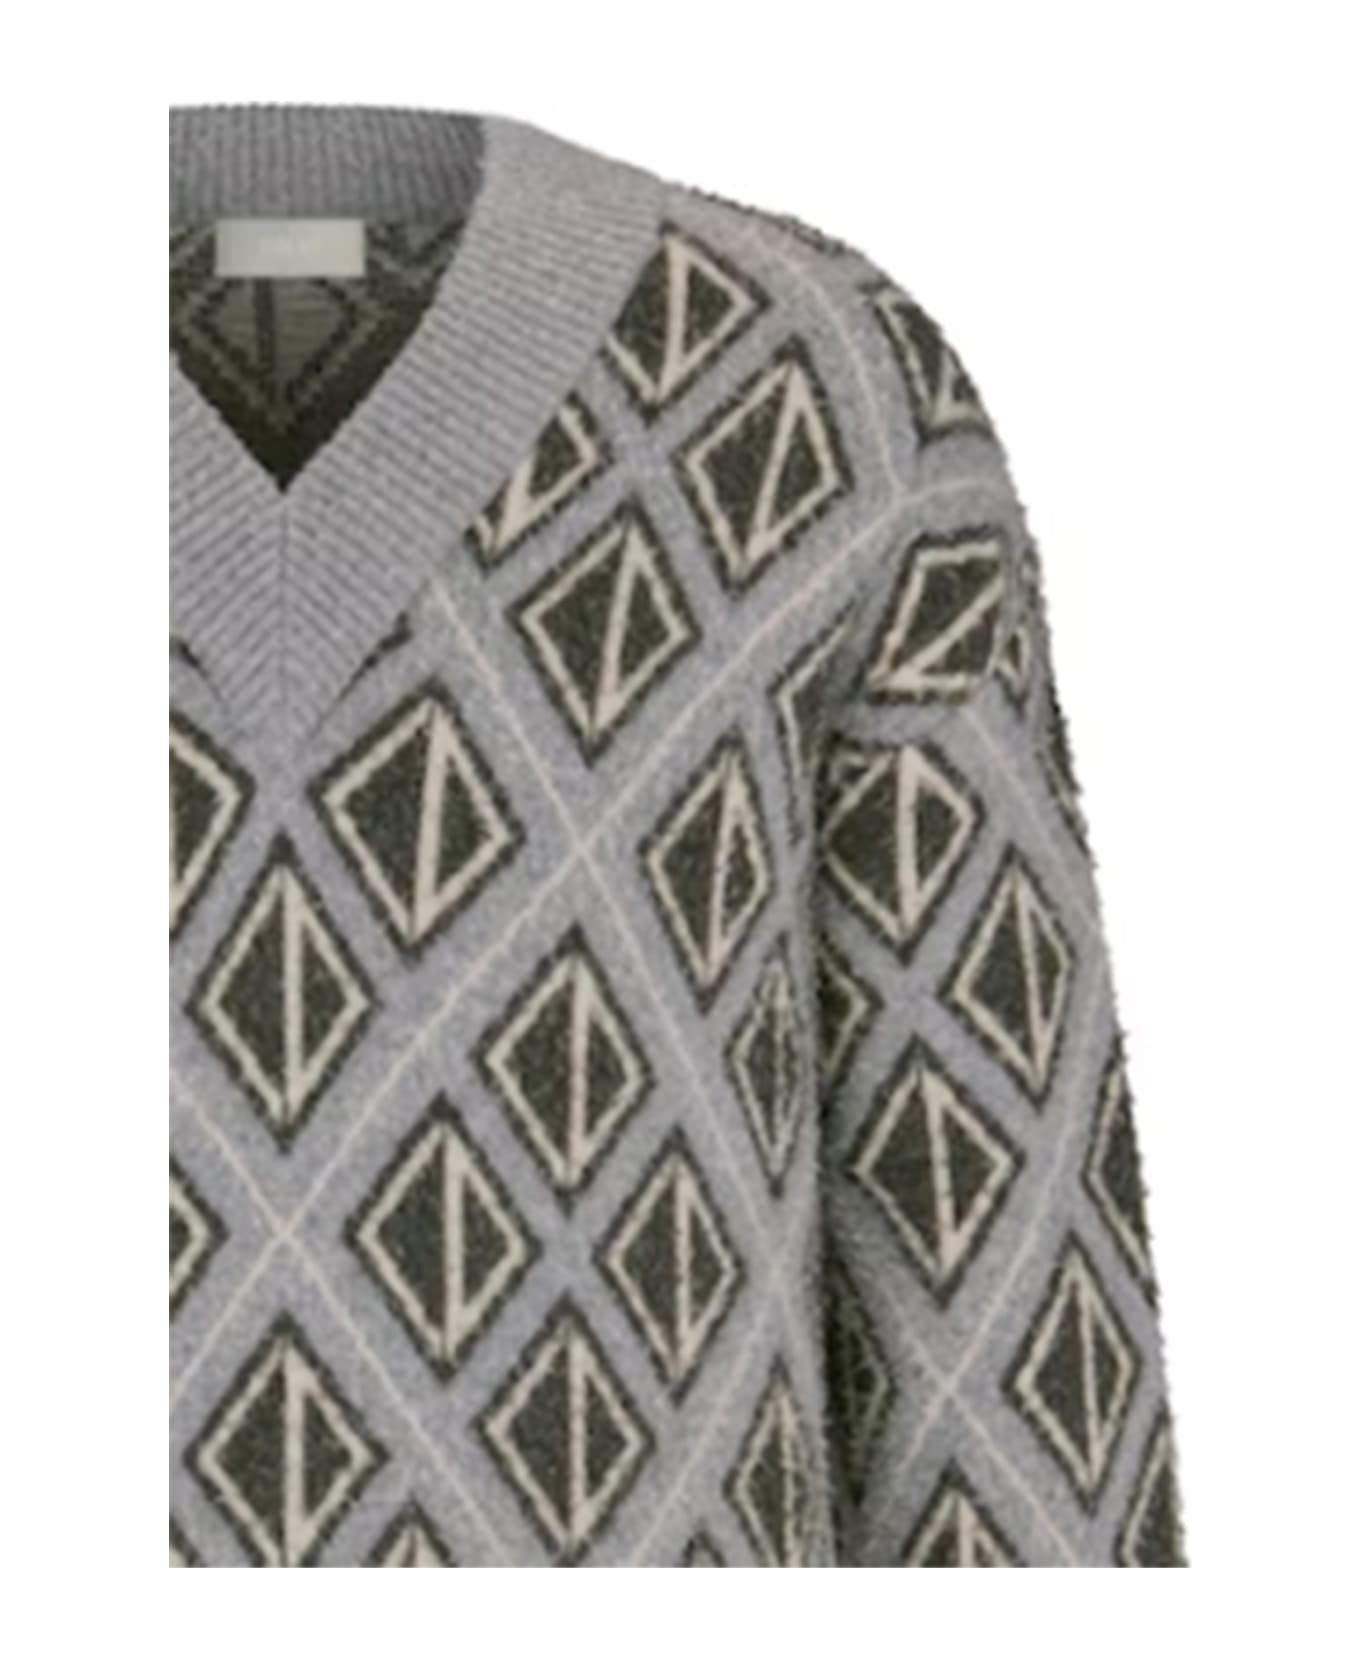 Dior Cd Diamond Motif Wool Sweater - Gray